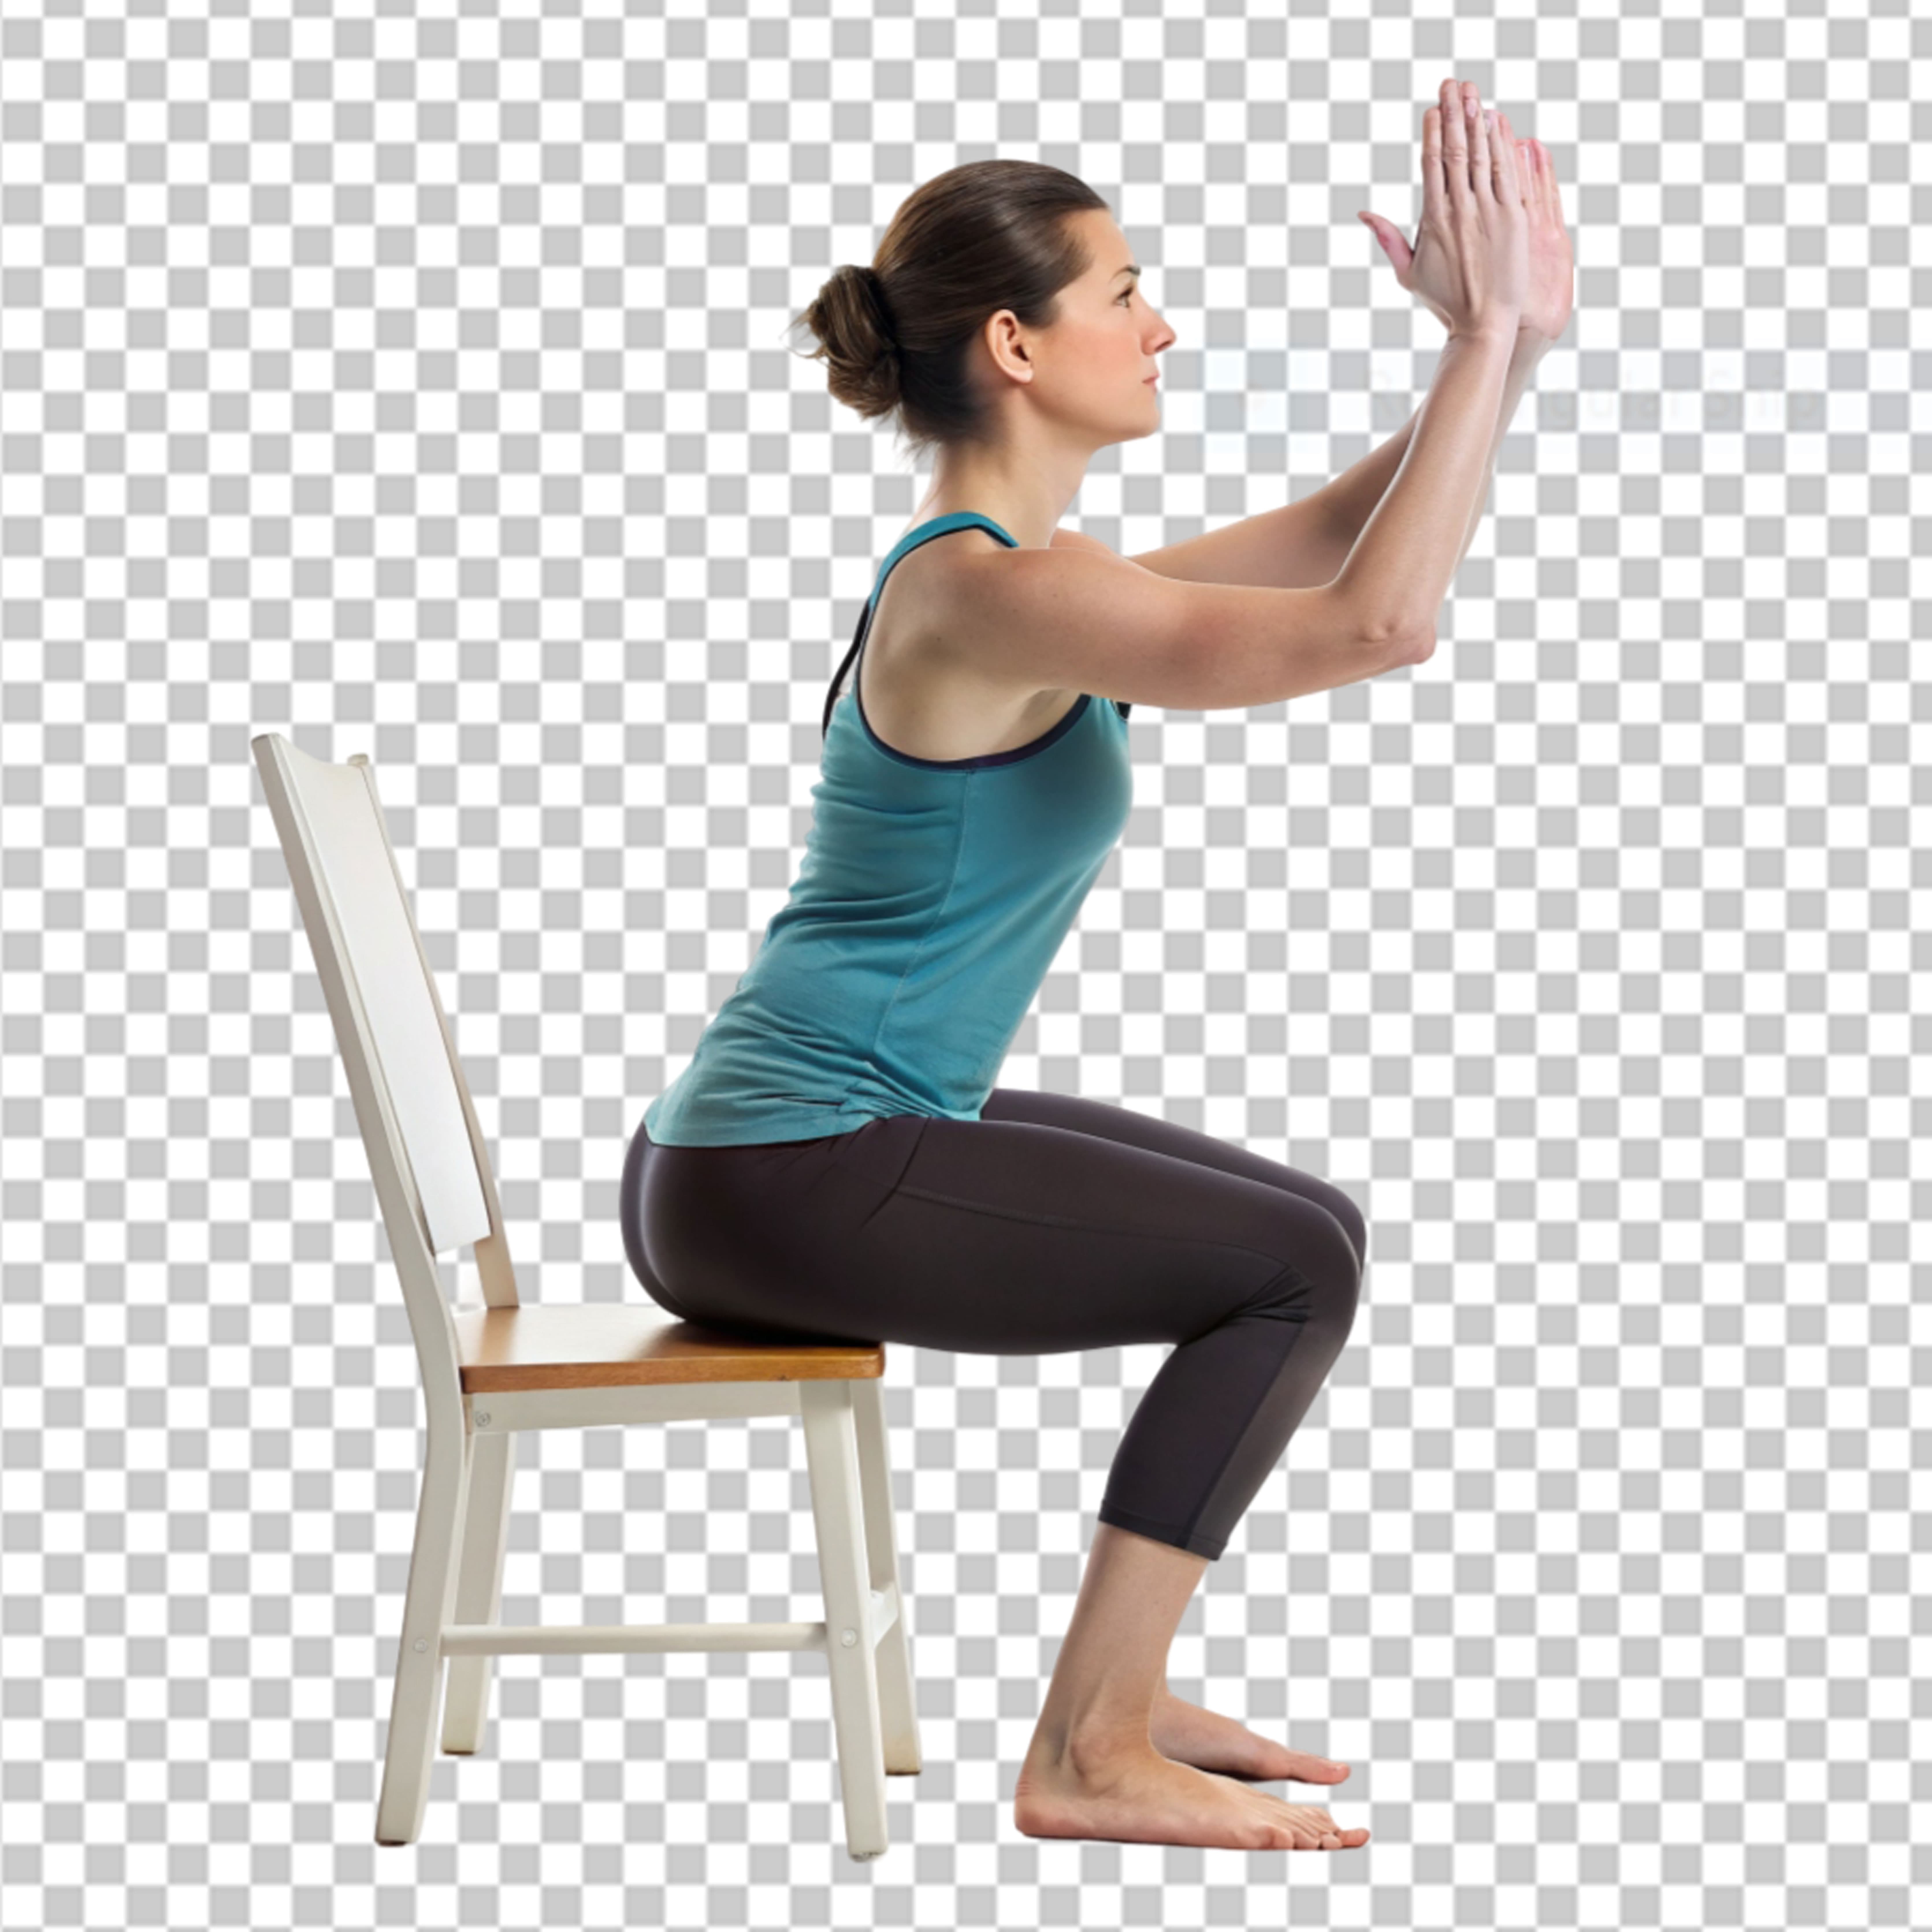 Benefits Chair Yoga for Arthritis